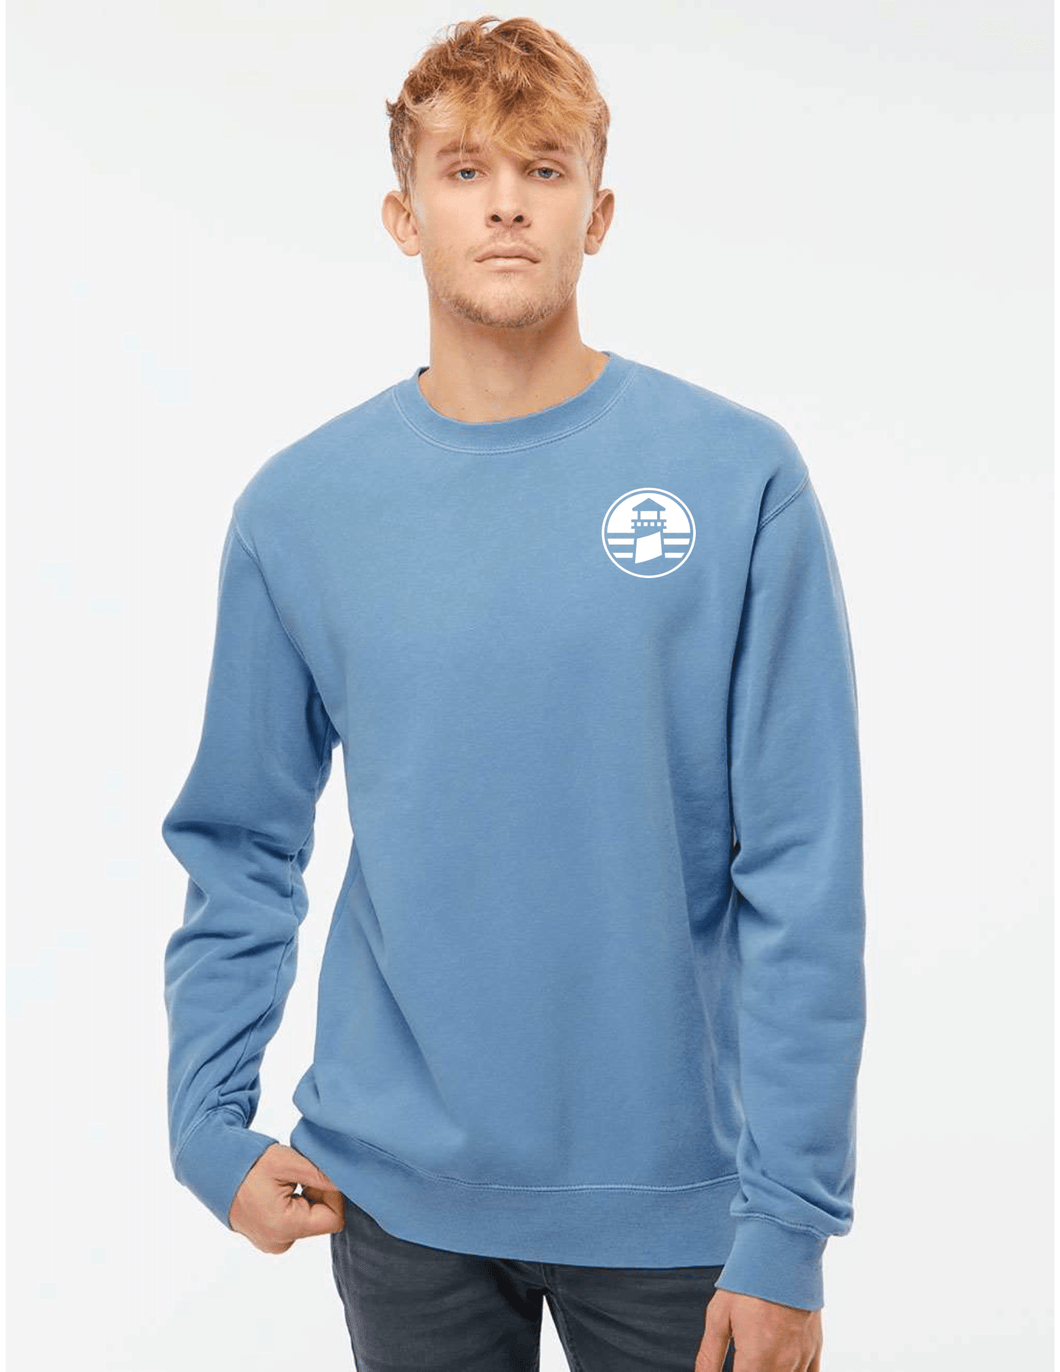 Lighthouse Crewneck Sweatshirt- Huron Blue